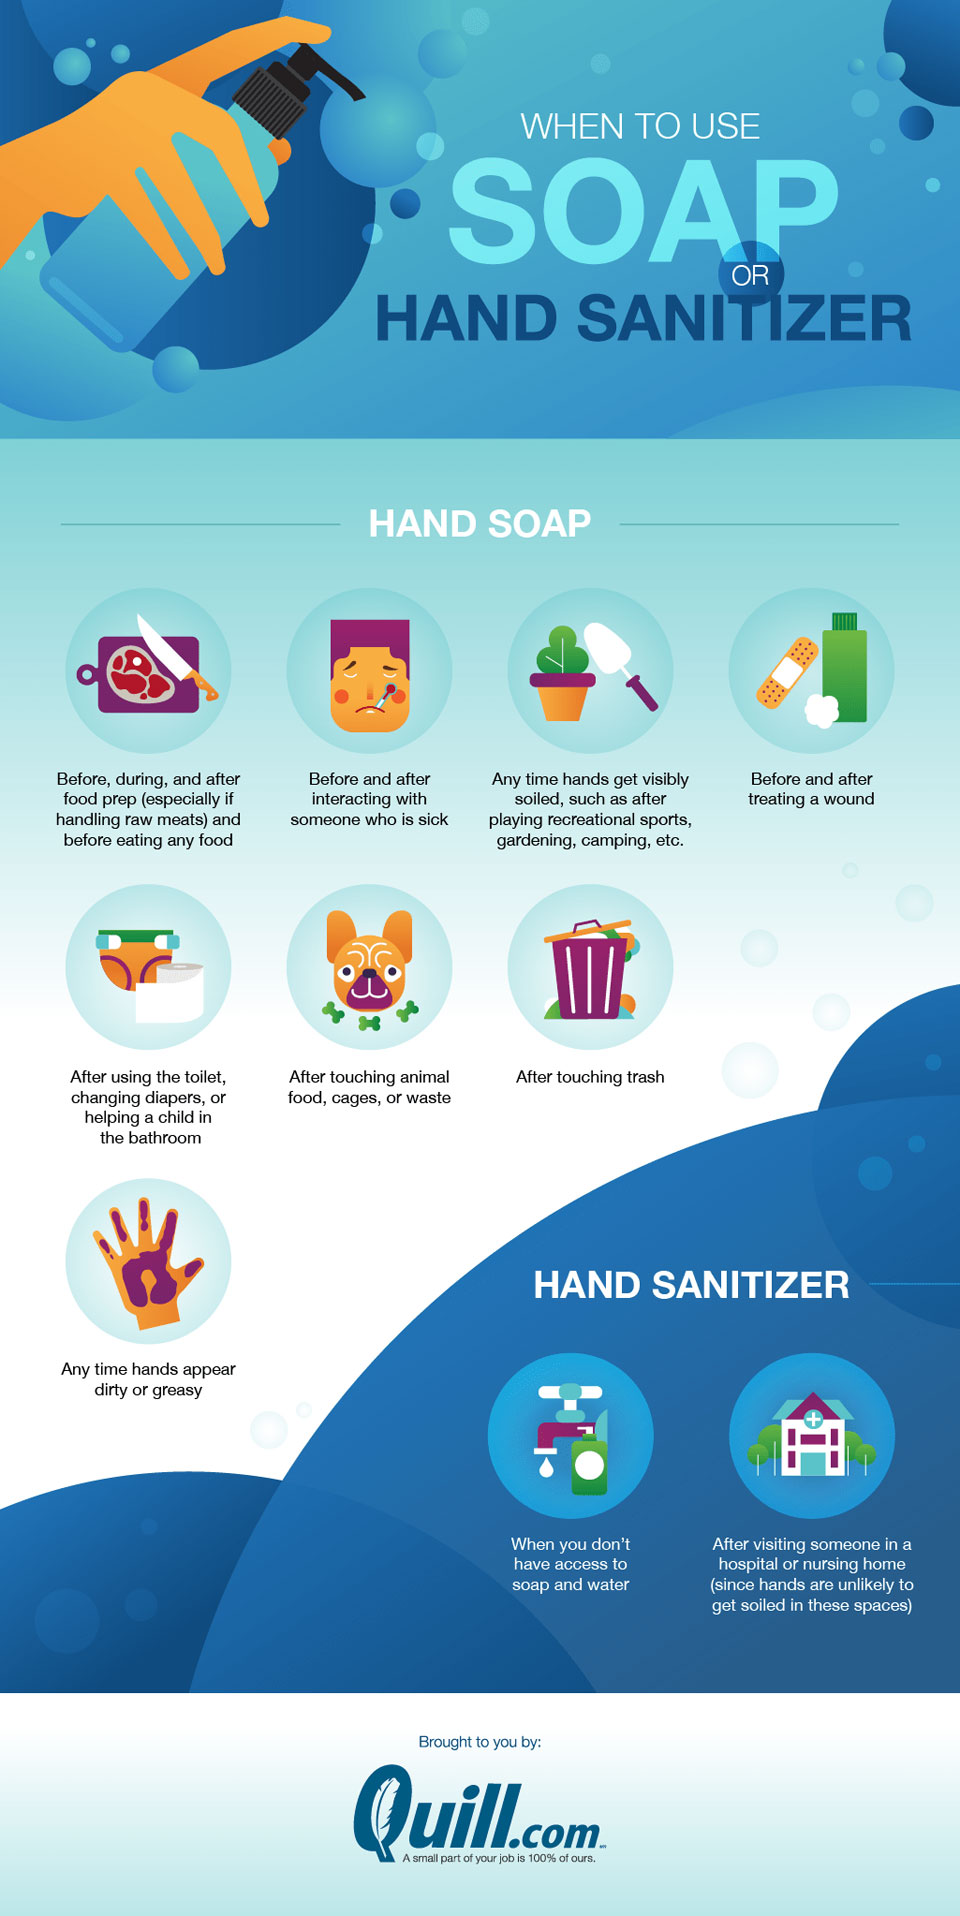 Soap or Hand sanitizer